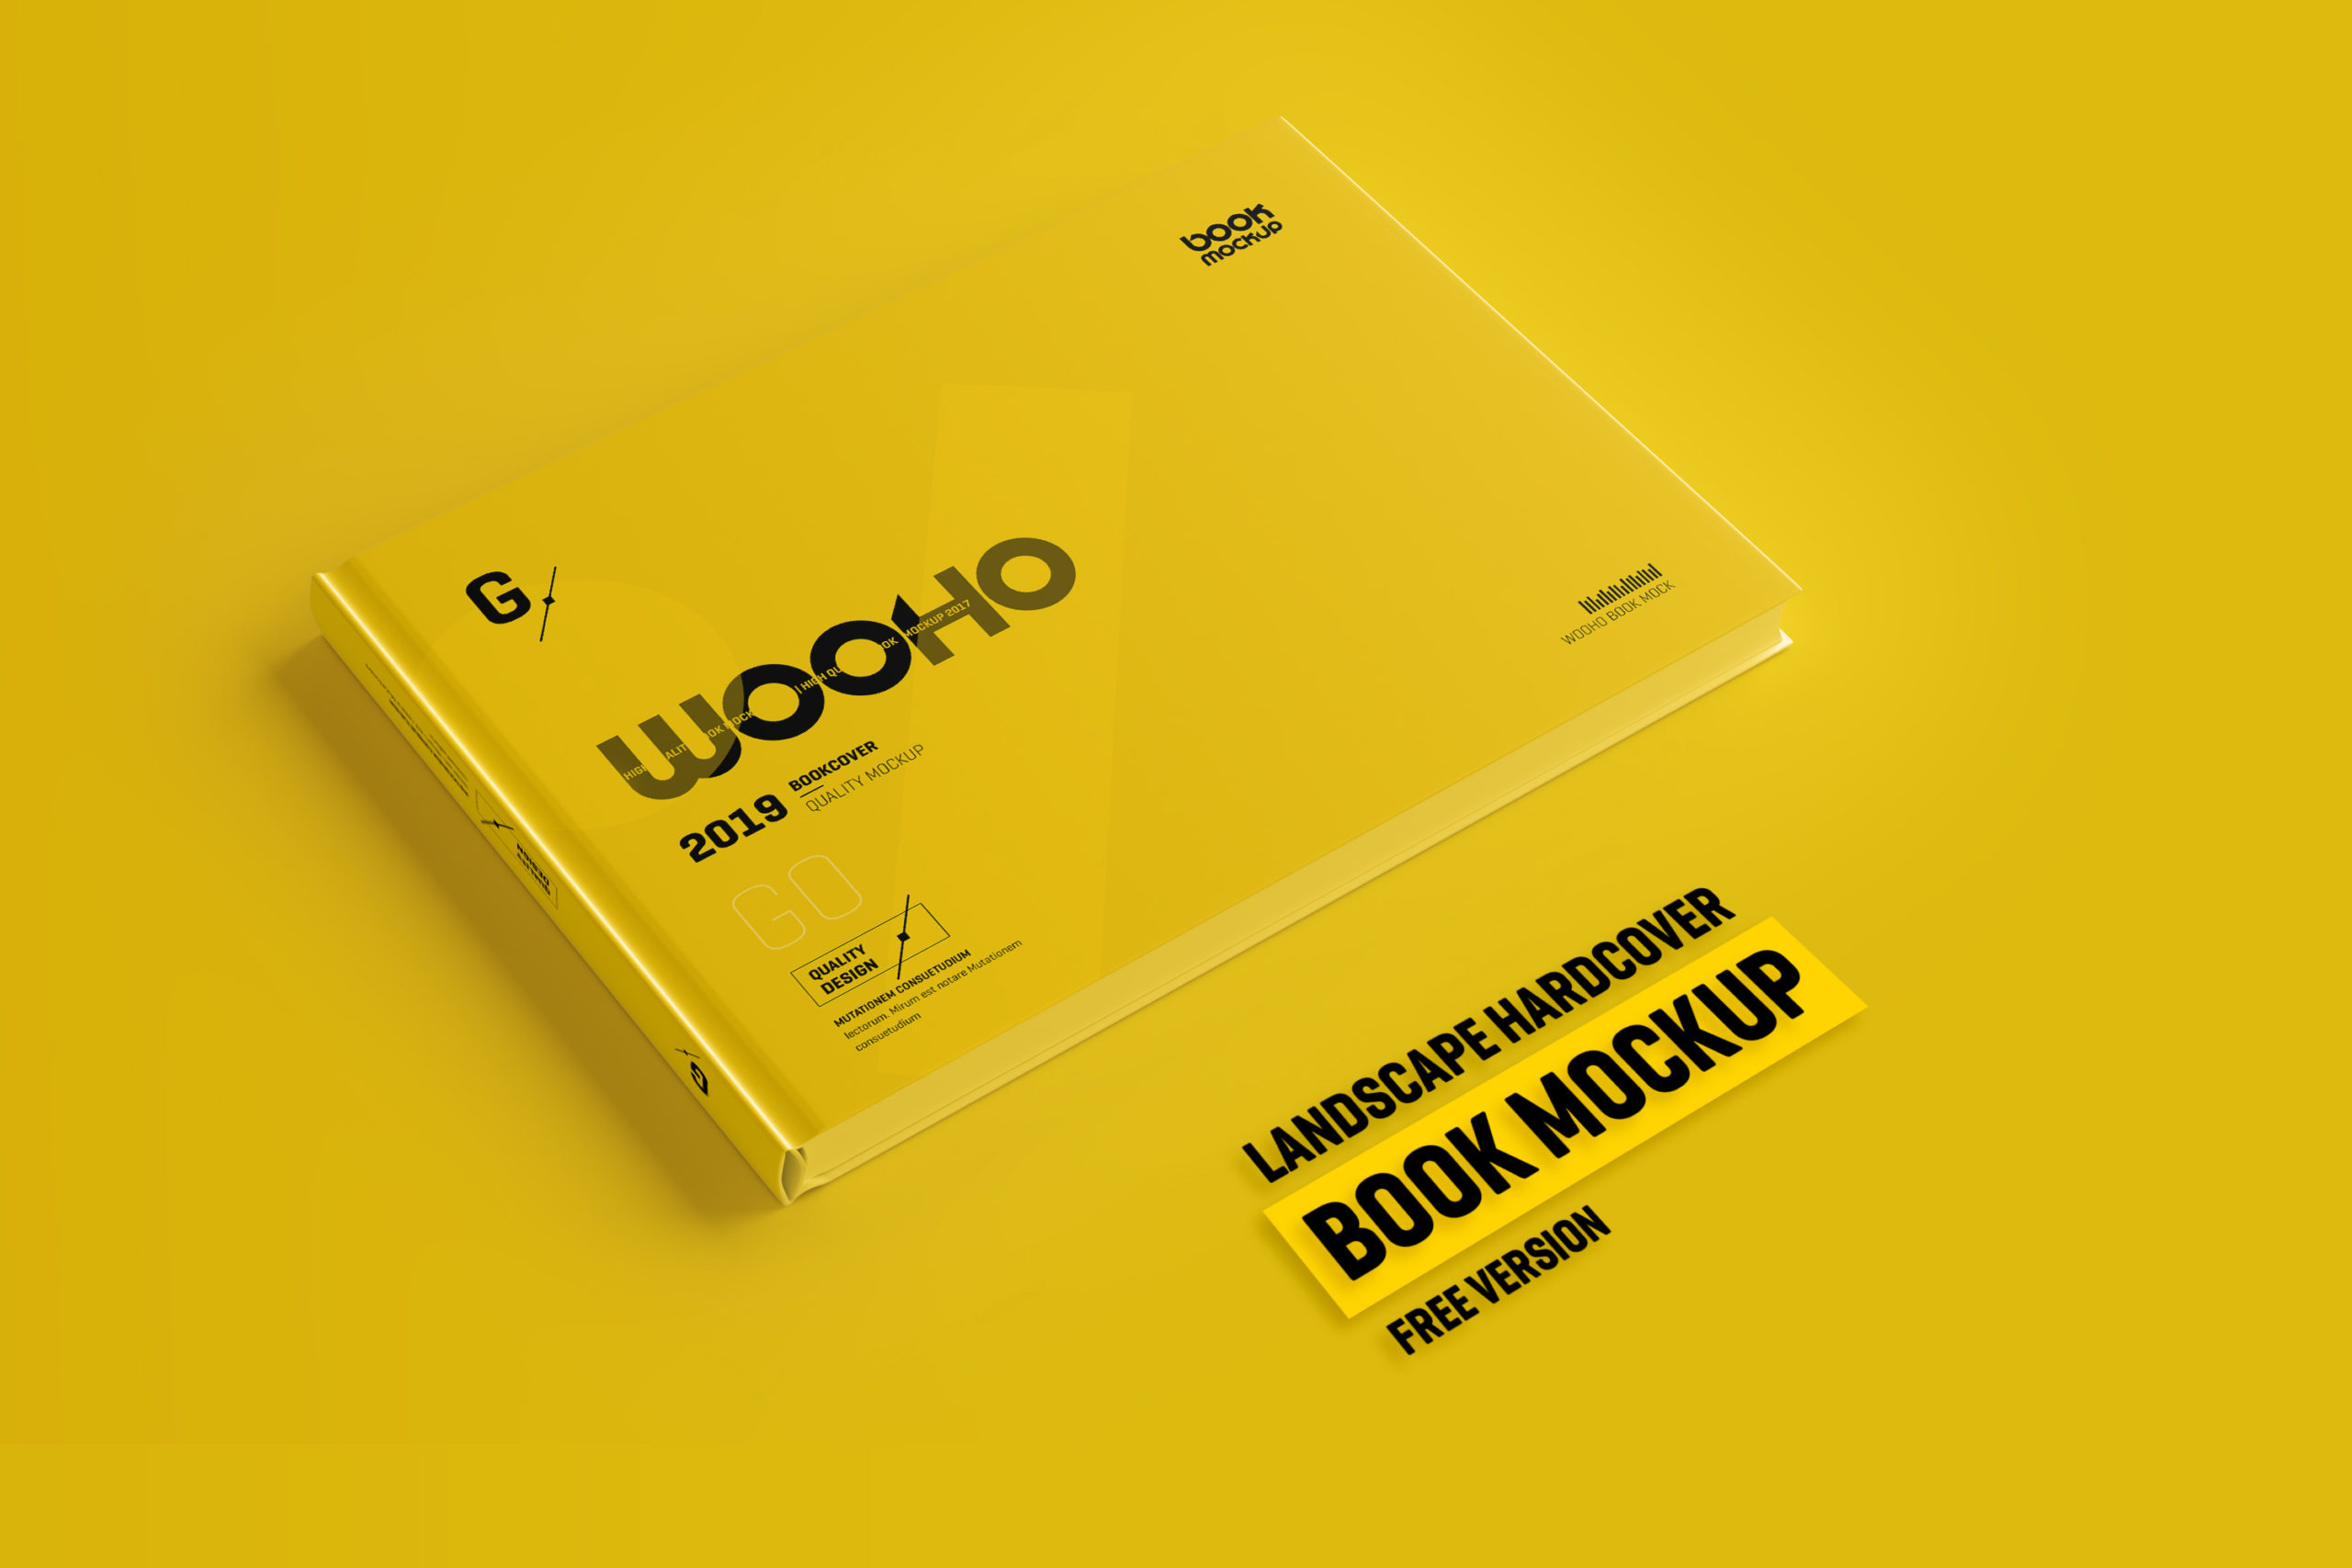 Download Landscape Hardcover Book Mockup PSD - Free Download PSD Mockup Templates